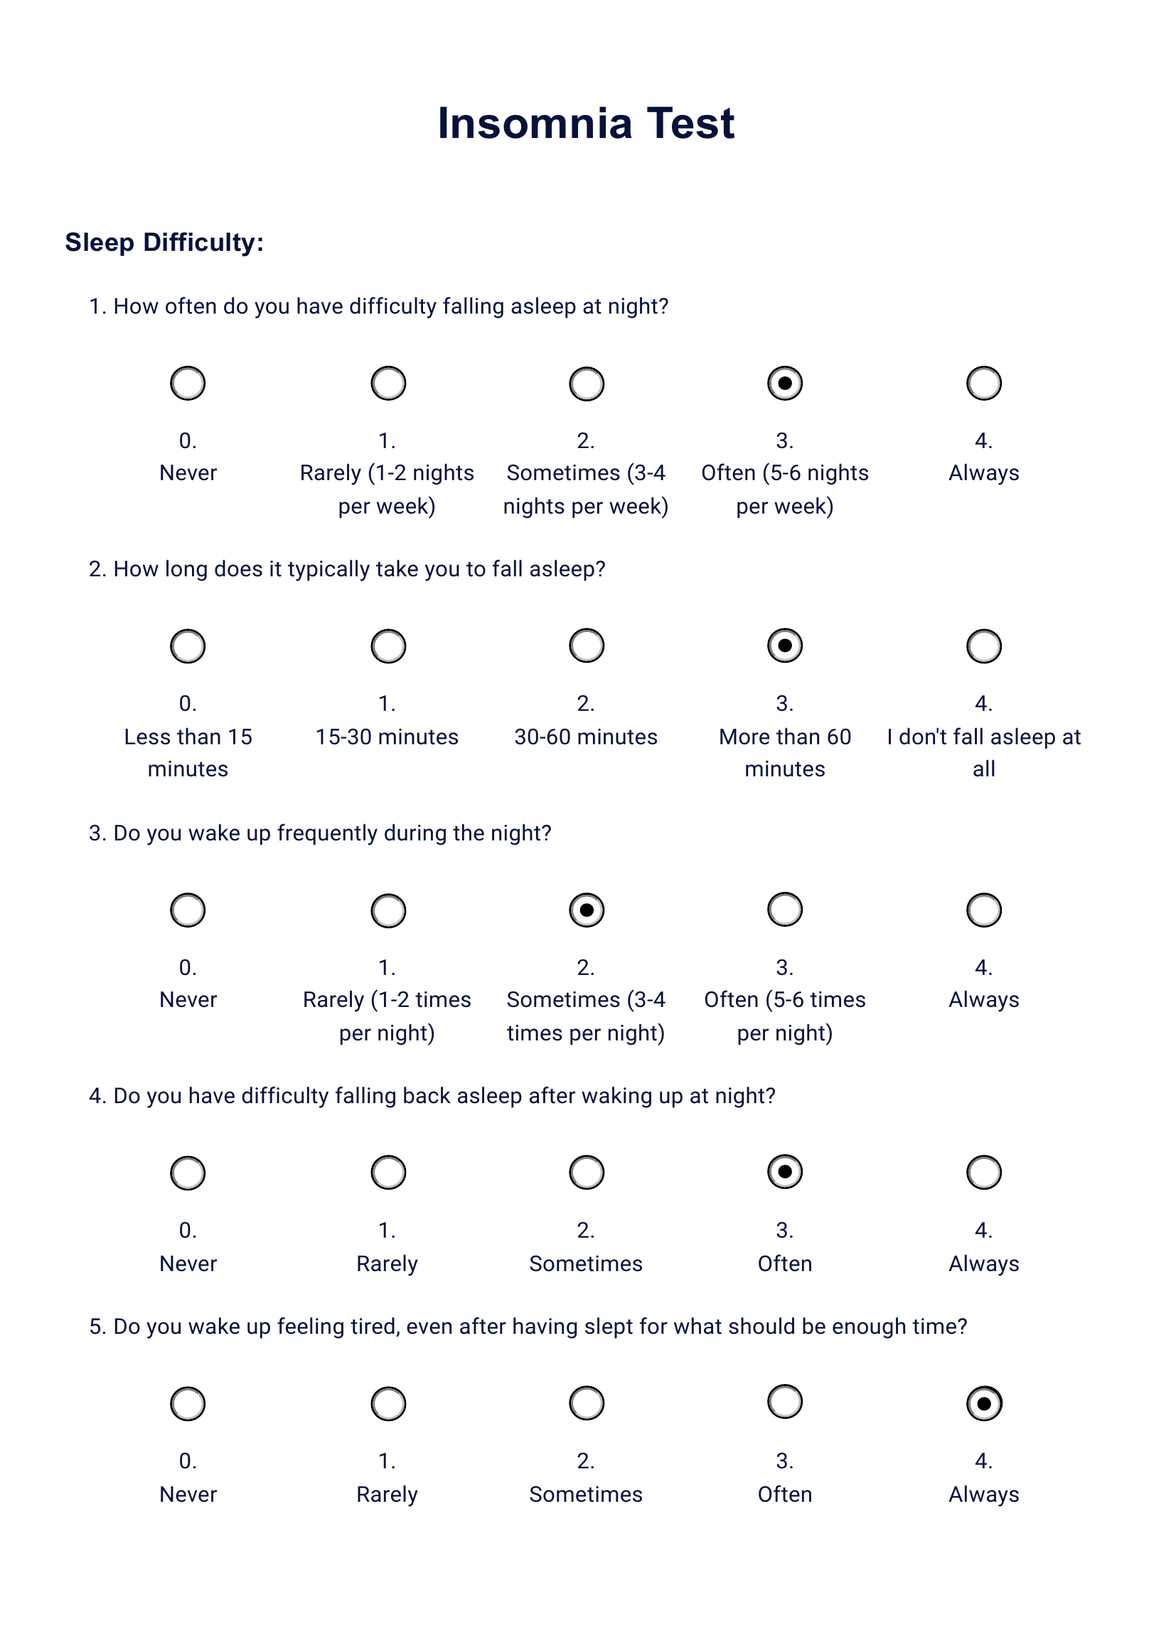 Insomnia Test: Take an Online Sleep Disorder Quiz PDF Example